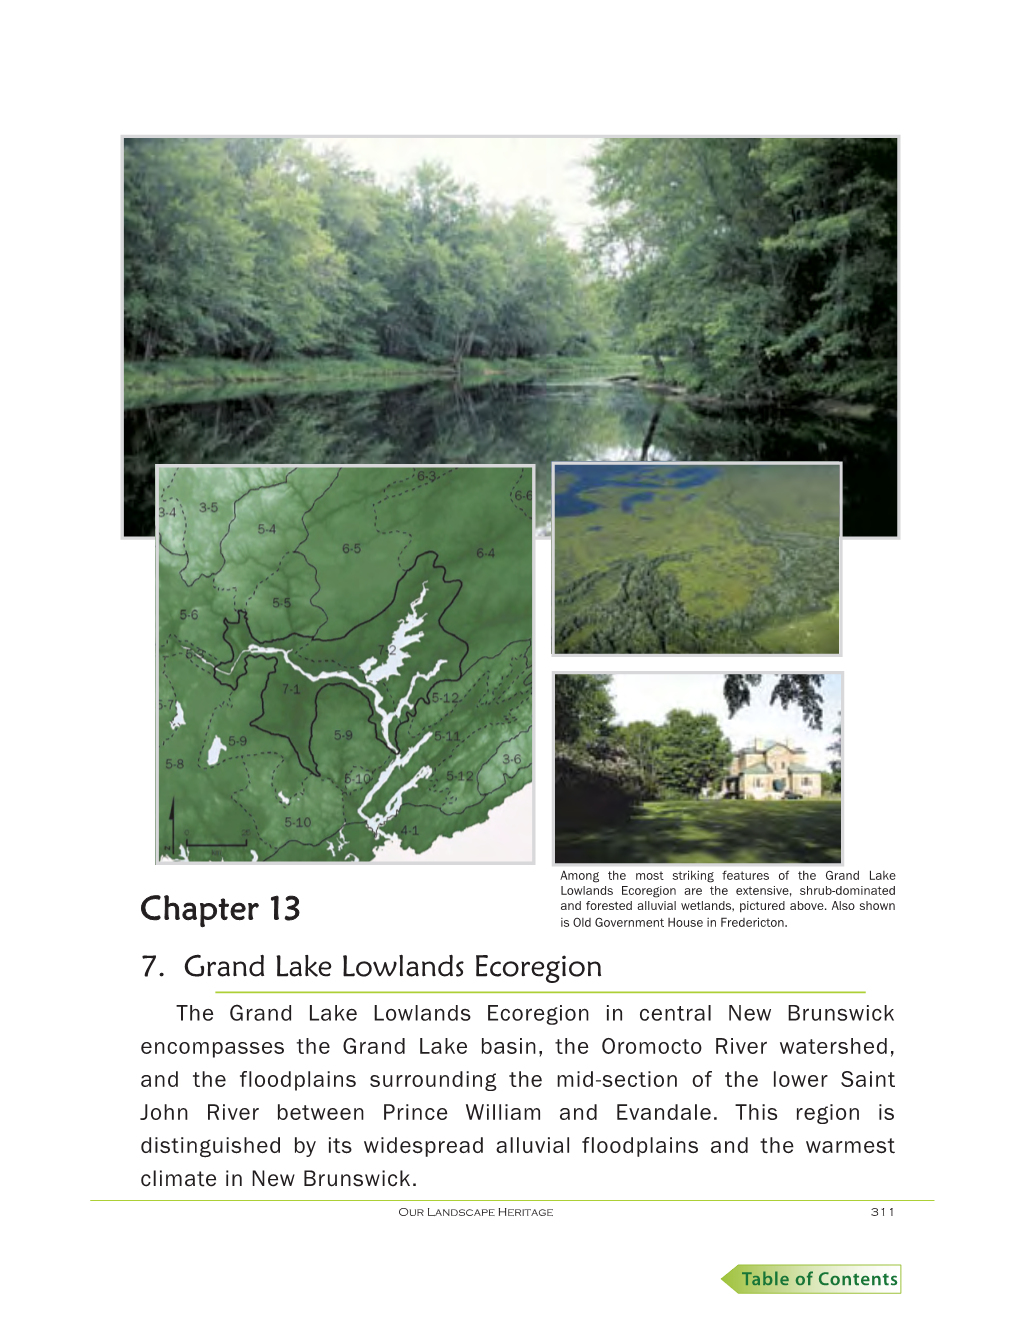 Chapter 13: Grand Lake Lowlands Ecoregion